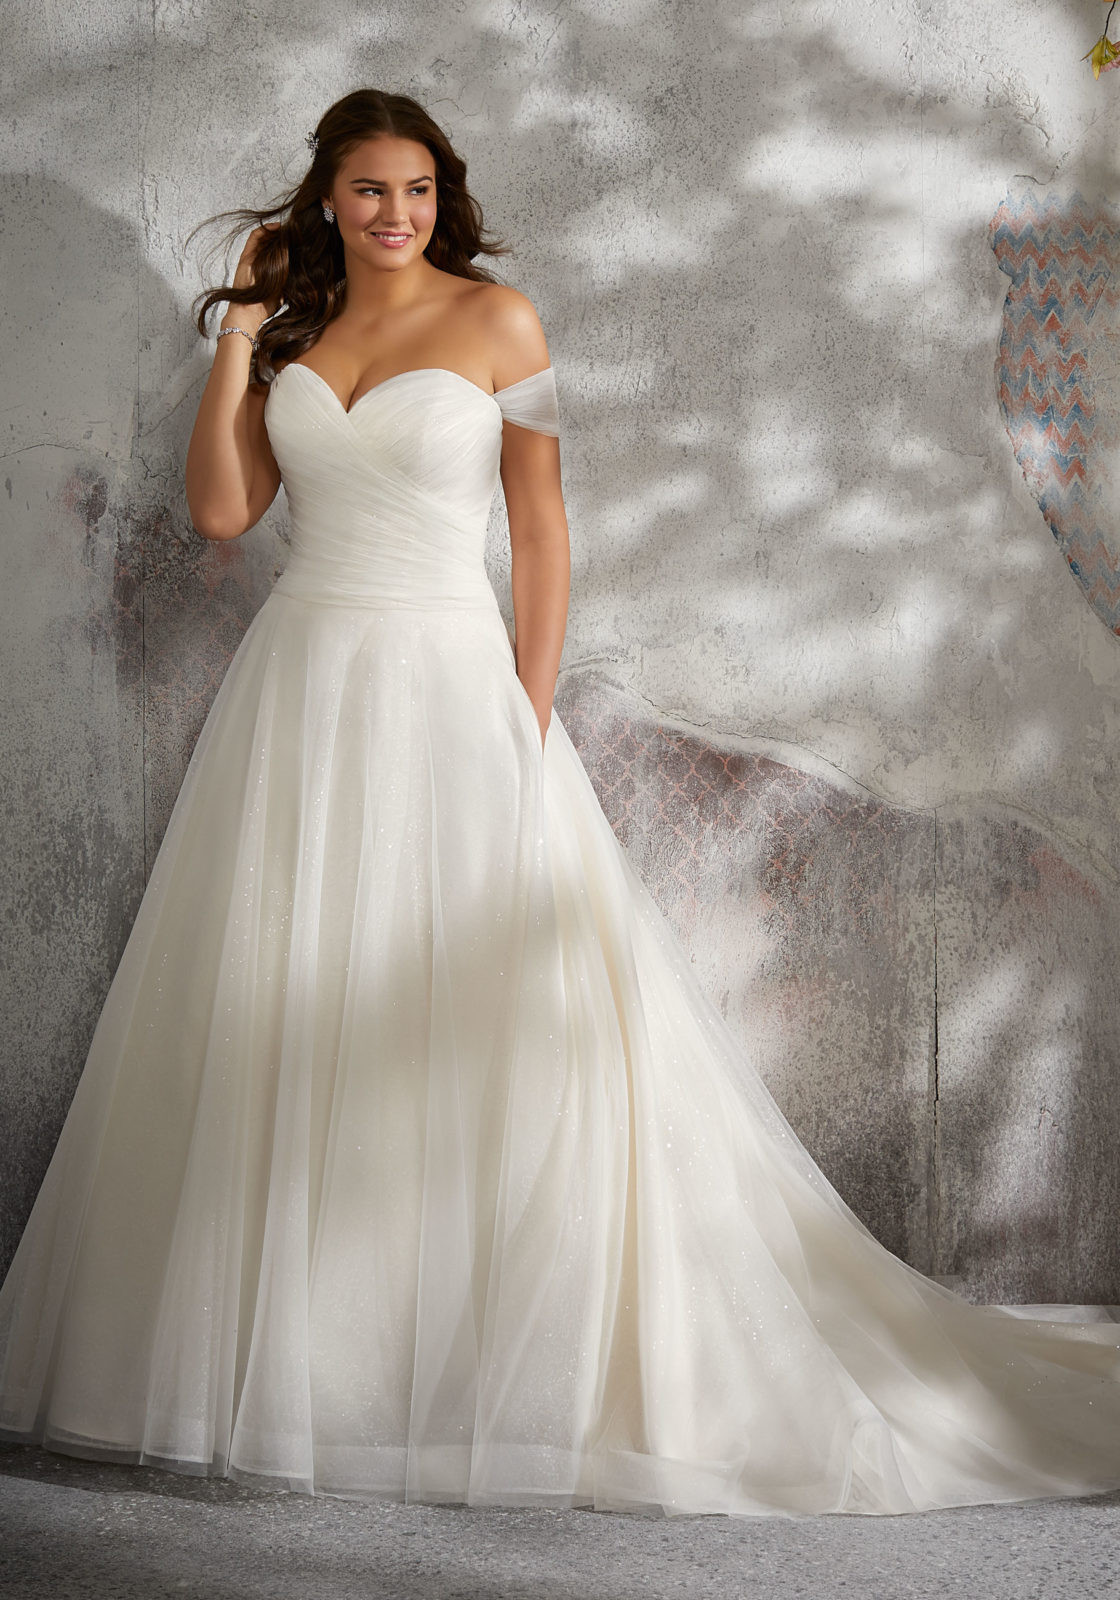 Plus Size Wedding Dresses With Color
 Lyla Plus Size Wedding Dress Style 3245